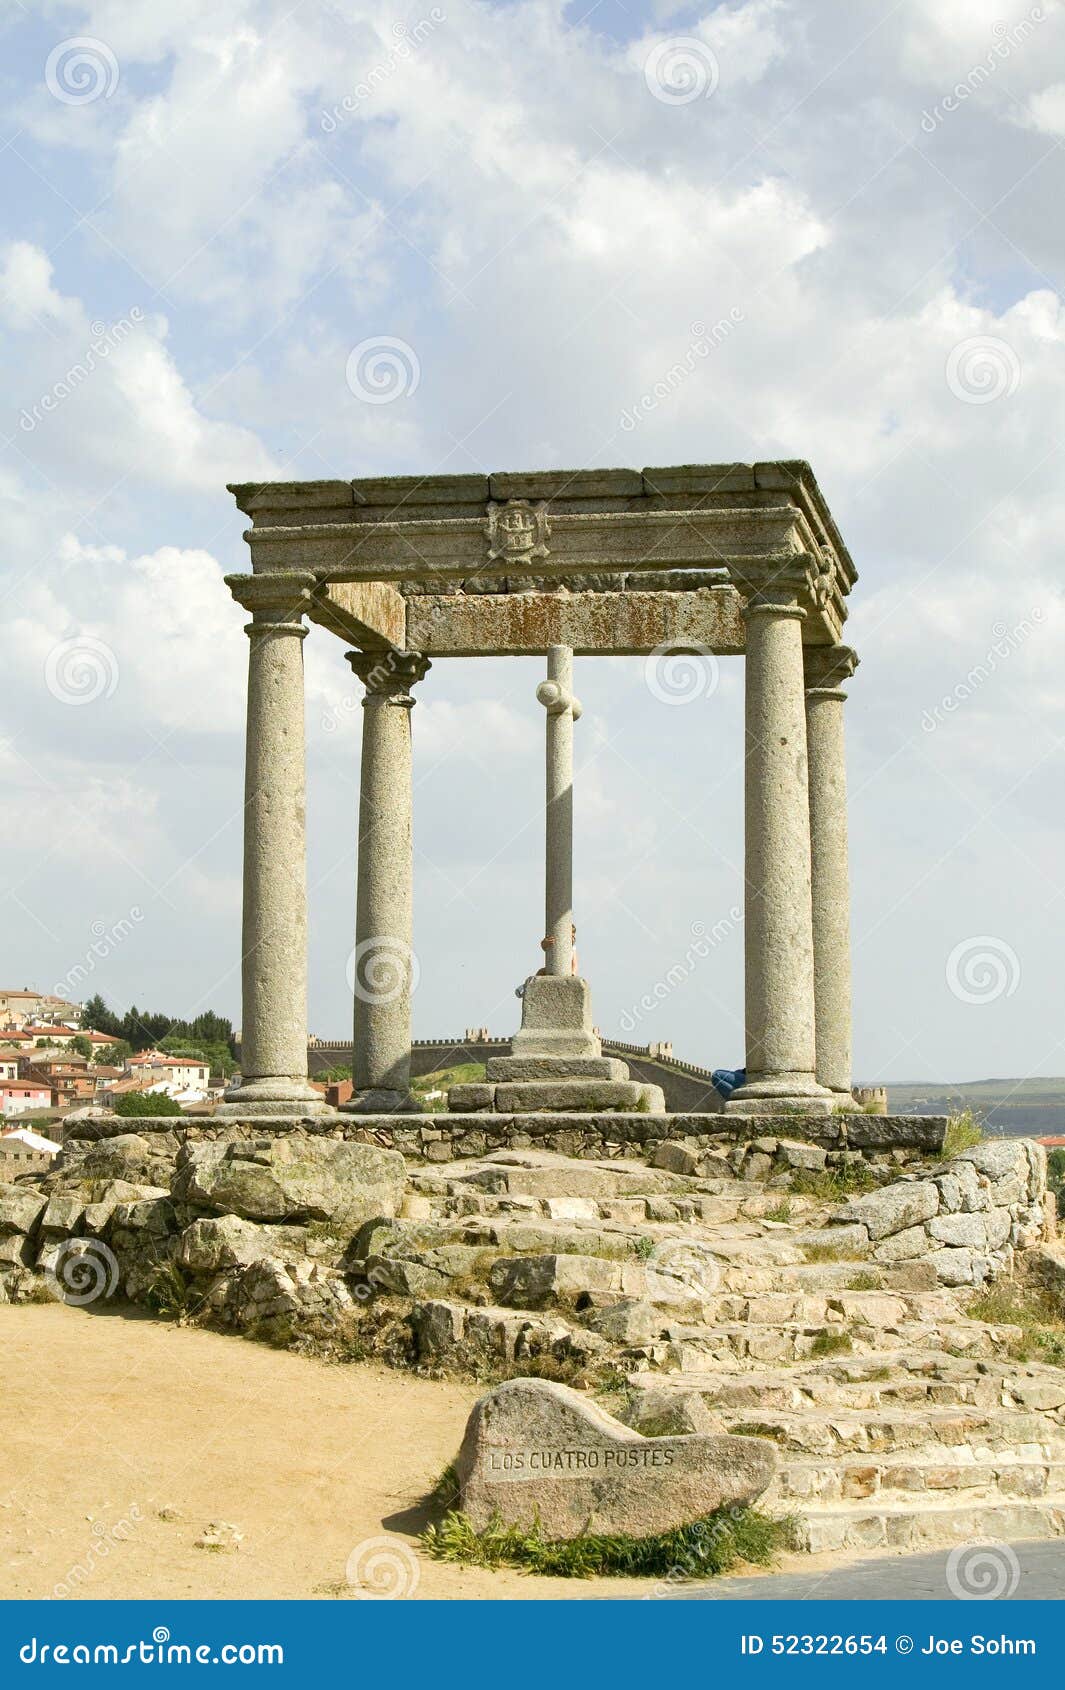 cuatros postes (four pillars or posts), avila spain, an old castilian spanish village